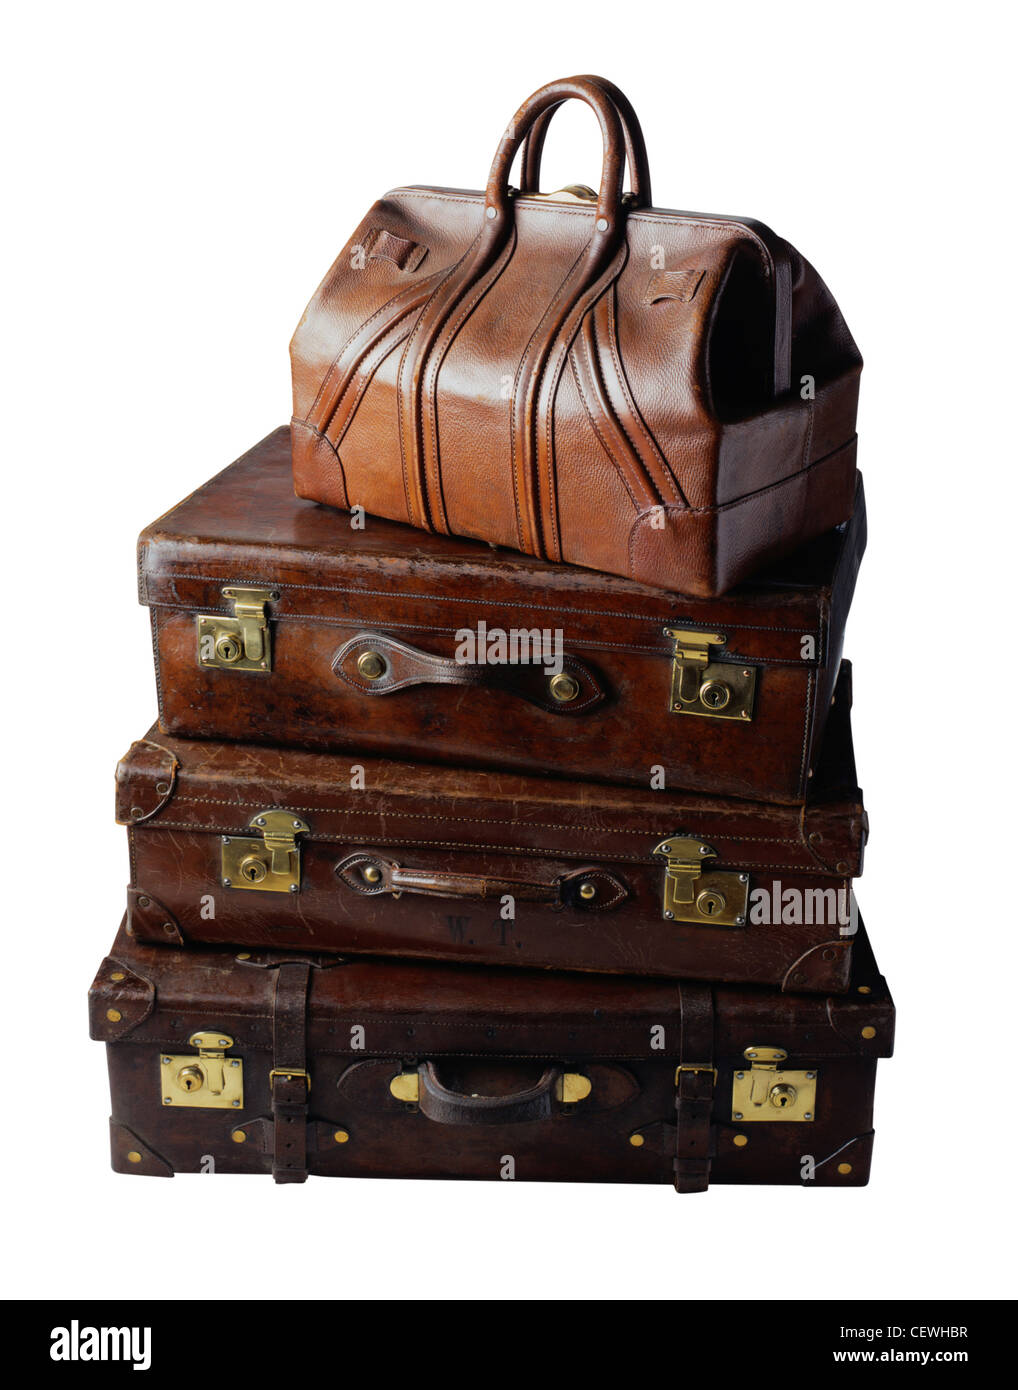 Vintage leather suitcases, isolated on white background. Stock Photo